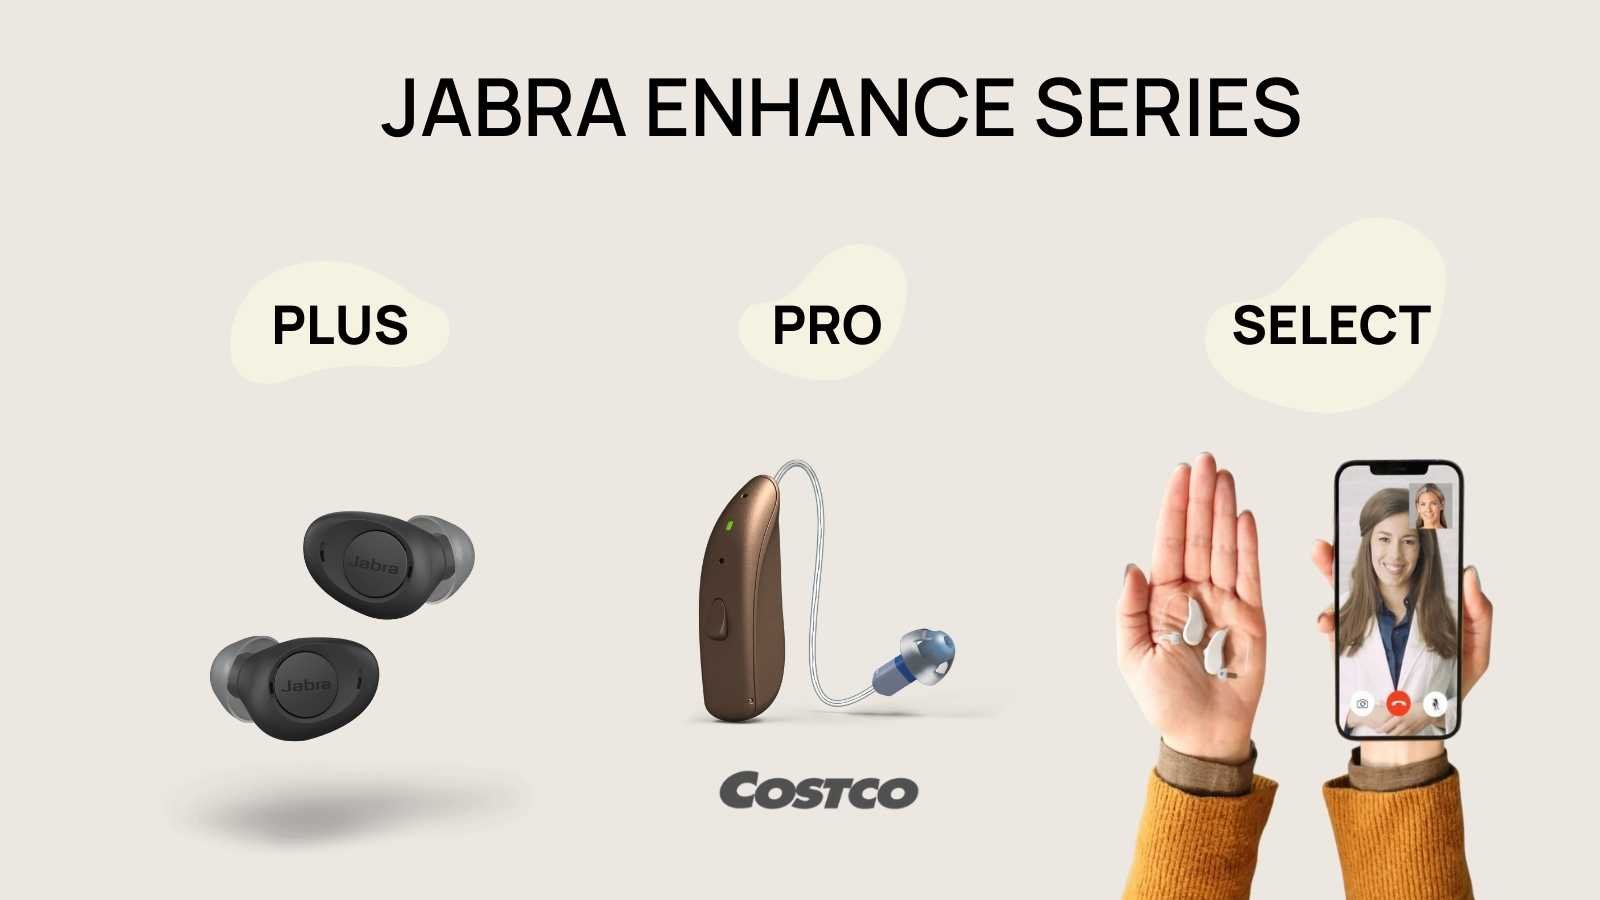 Jabra's three different hearing aid options